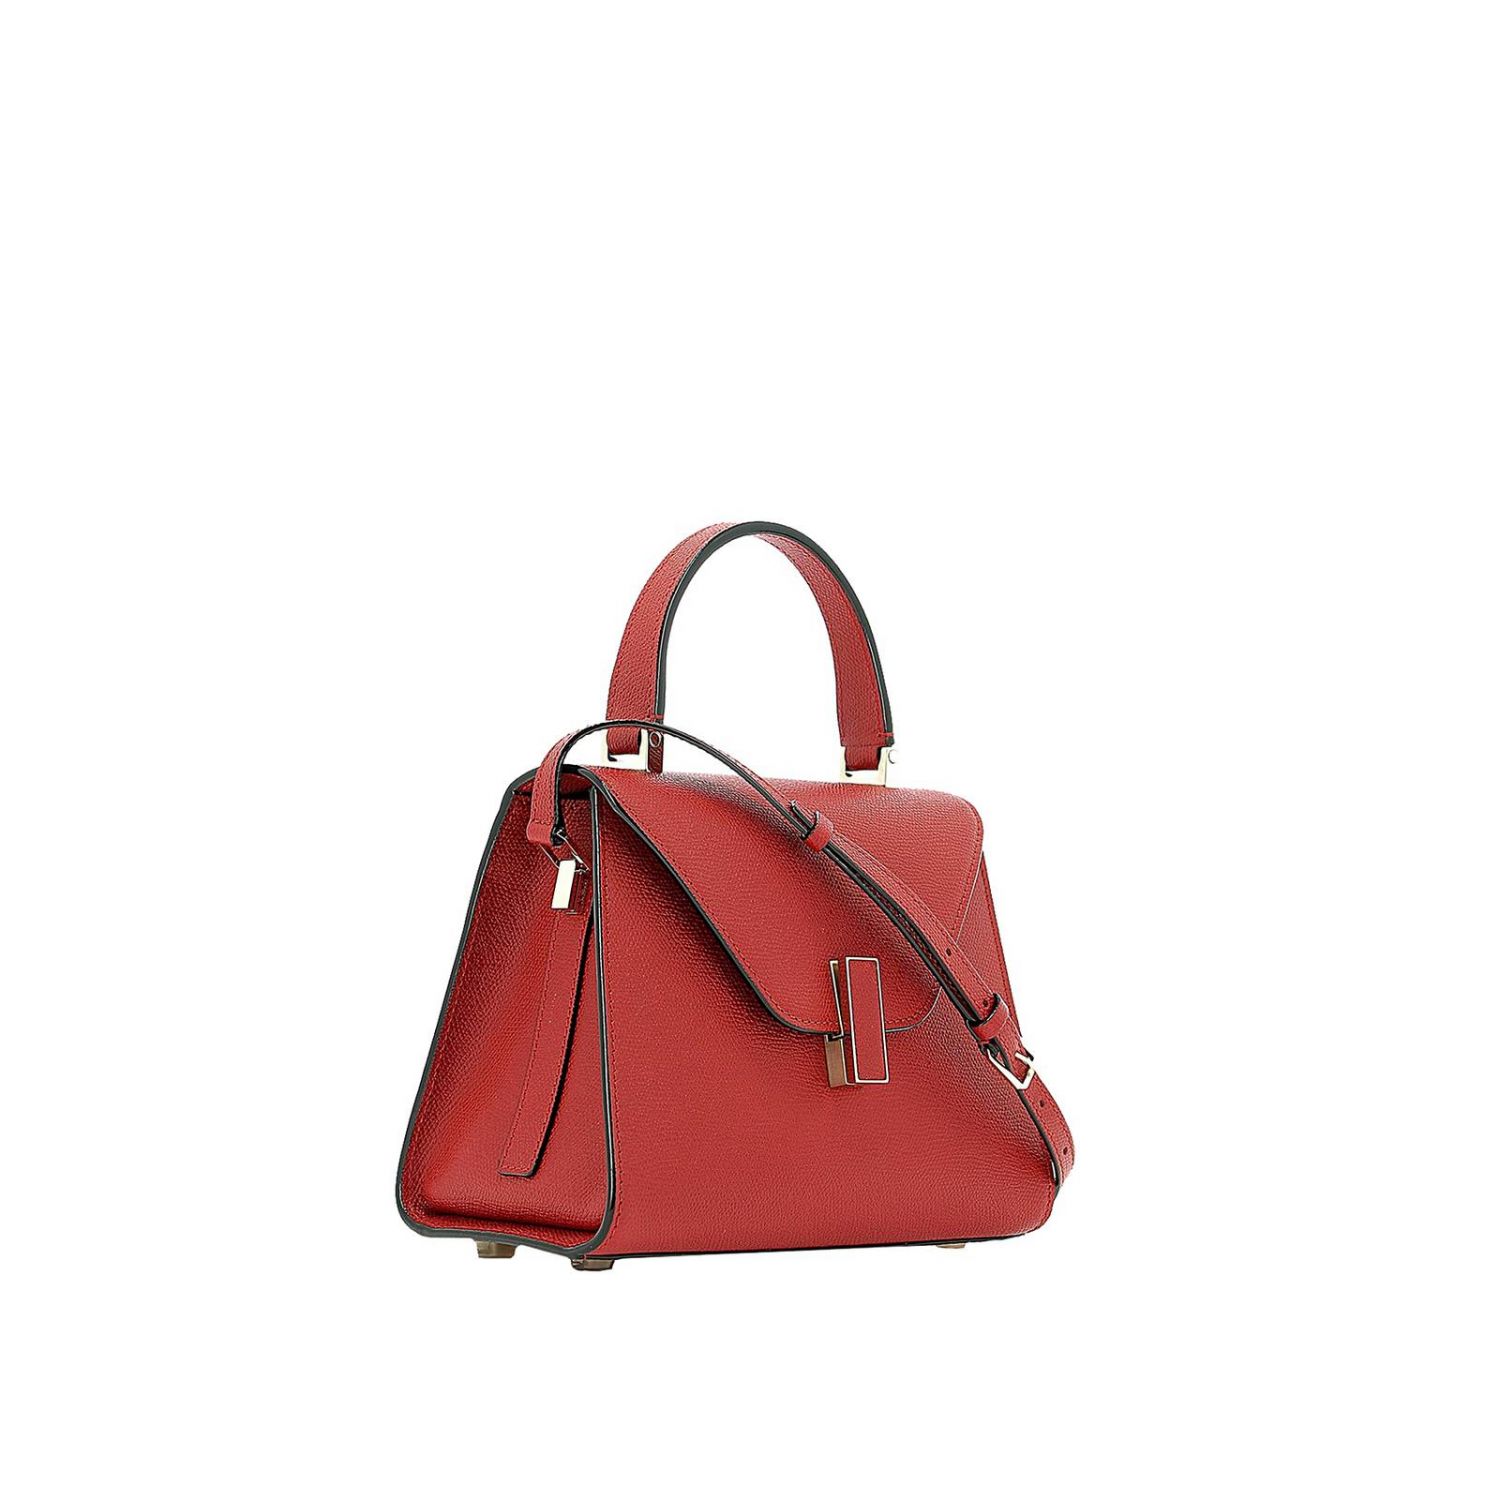 Valextra Outlet: Shoulder bag women | Handbag Valextra Women Gold ...